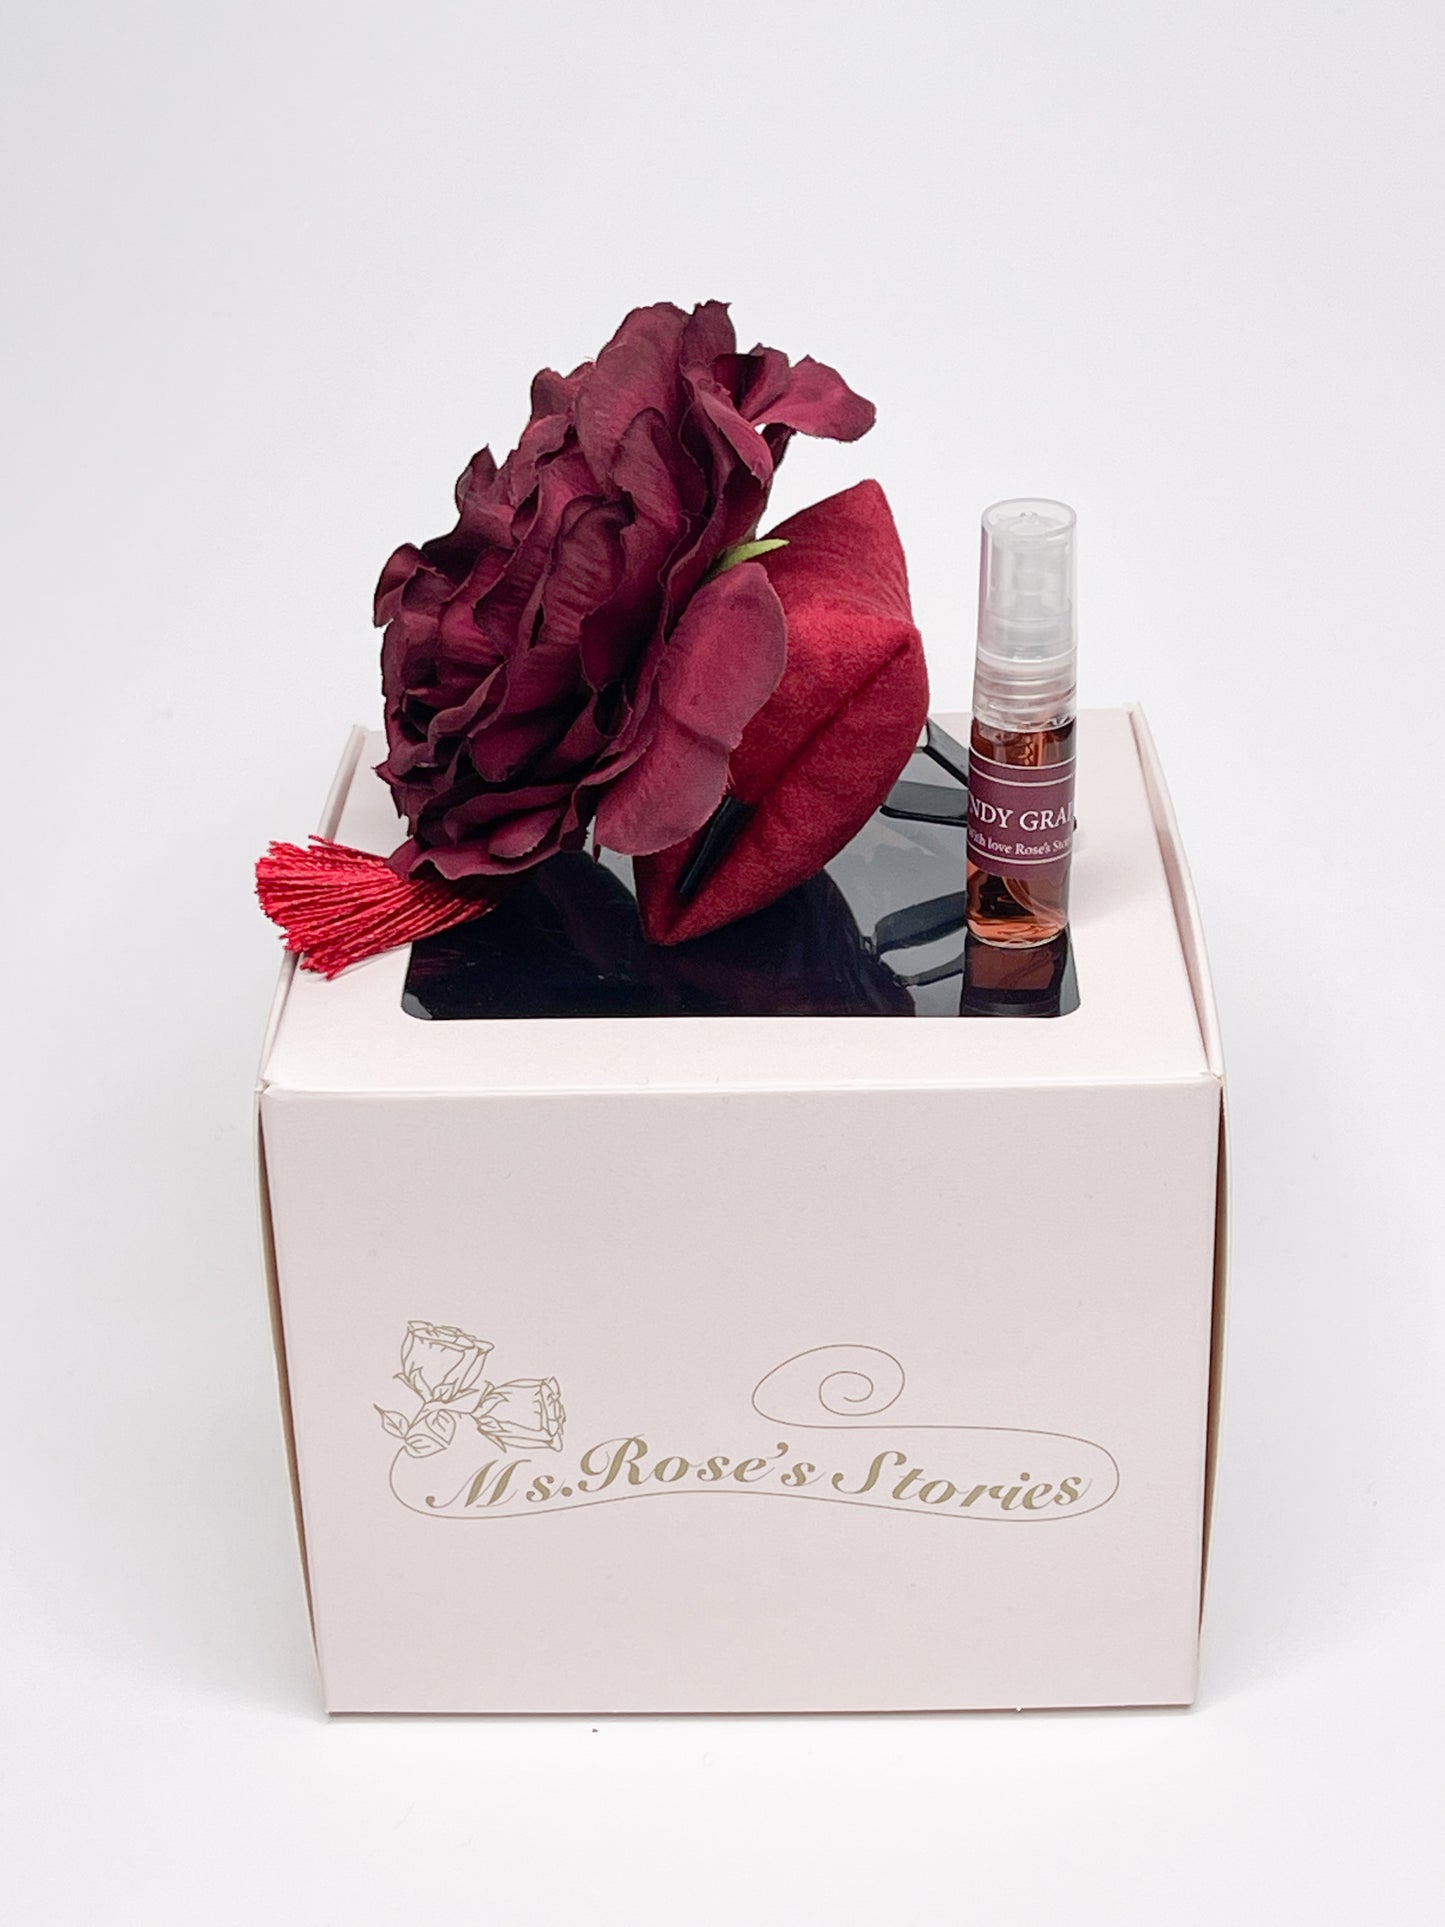 "Bordeaux rose" car fragrance